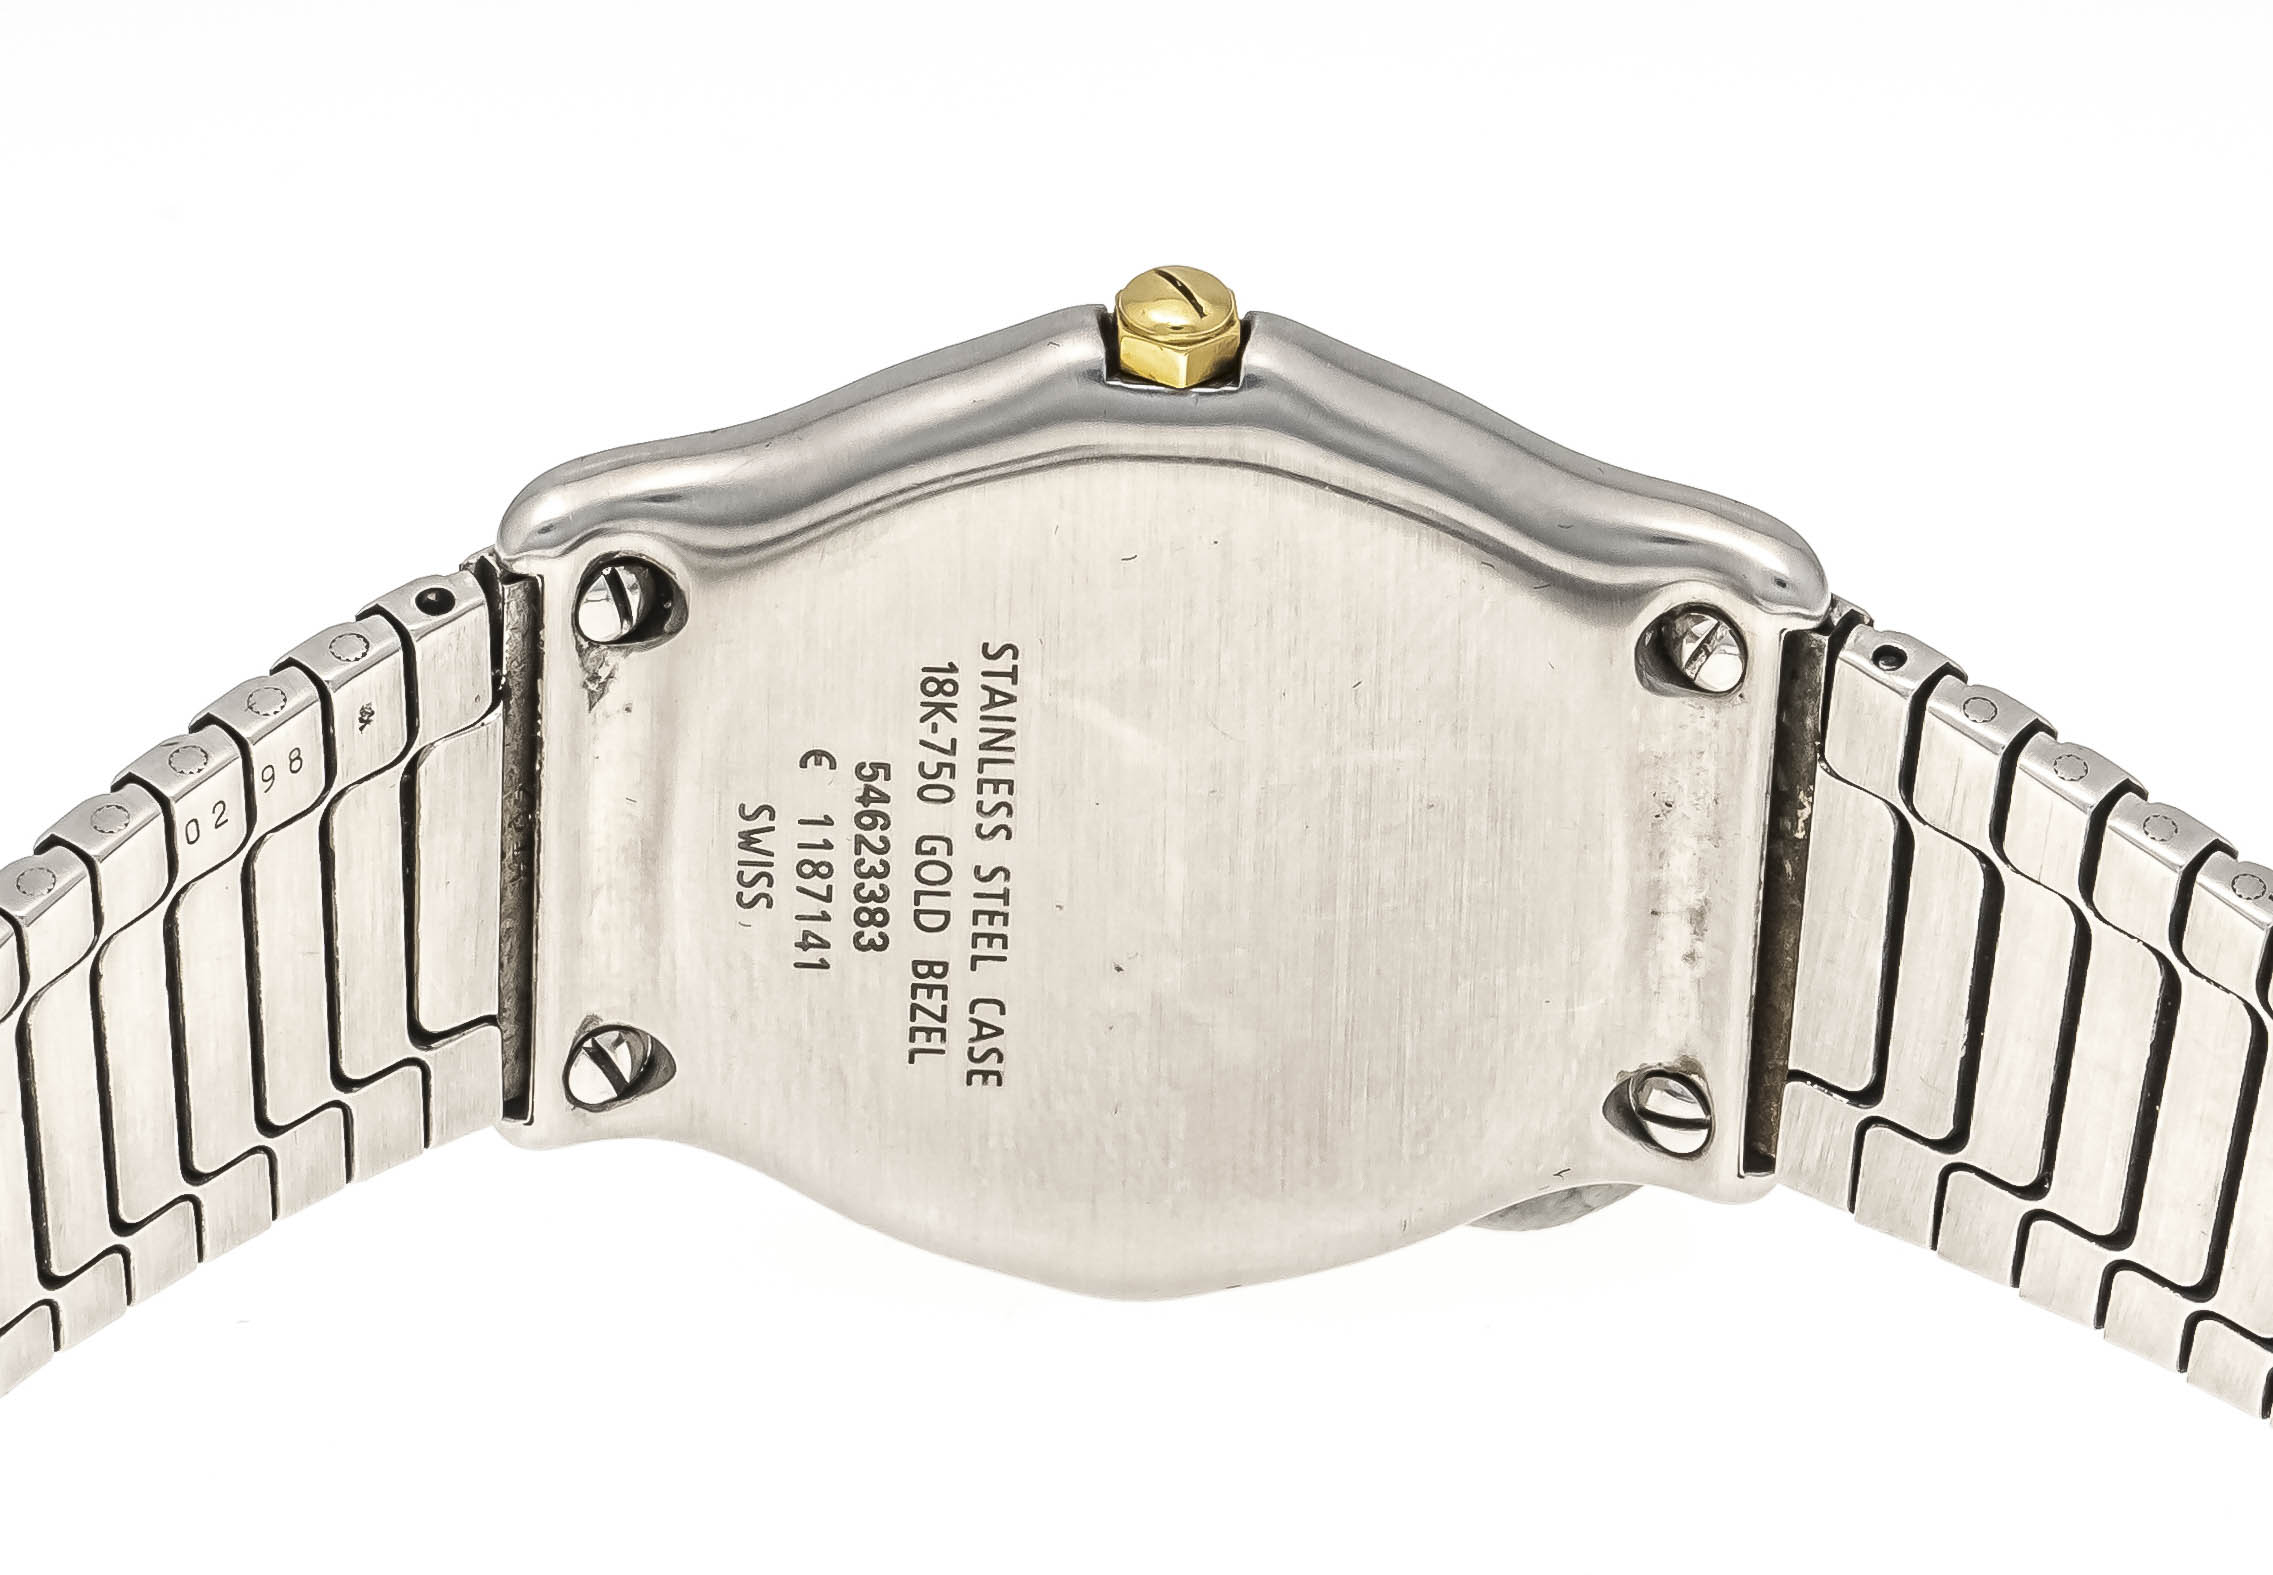 Ebel ''Sport Classique Wave'', men's quartz watch, steel/gold, 750/000 GG, ref. 118.7141, from 1999, - Image 2 of 3